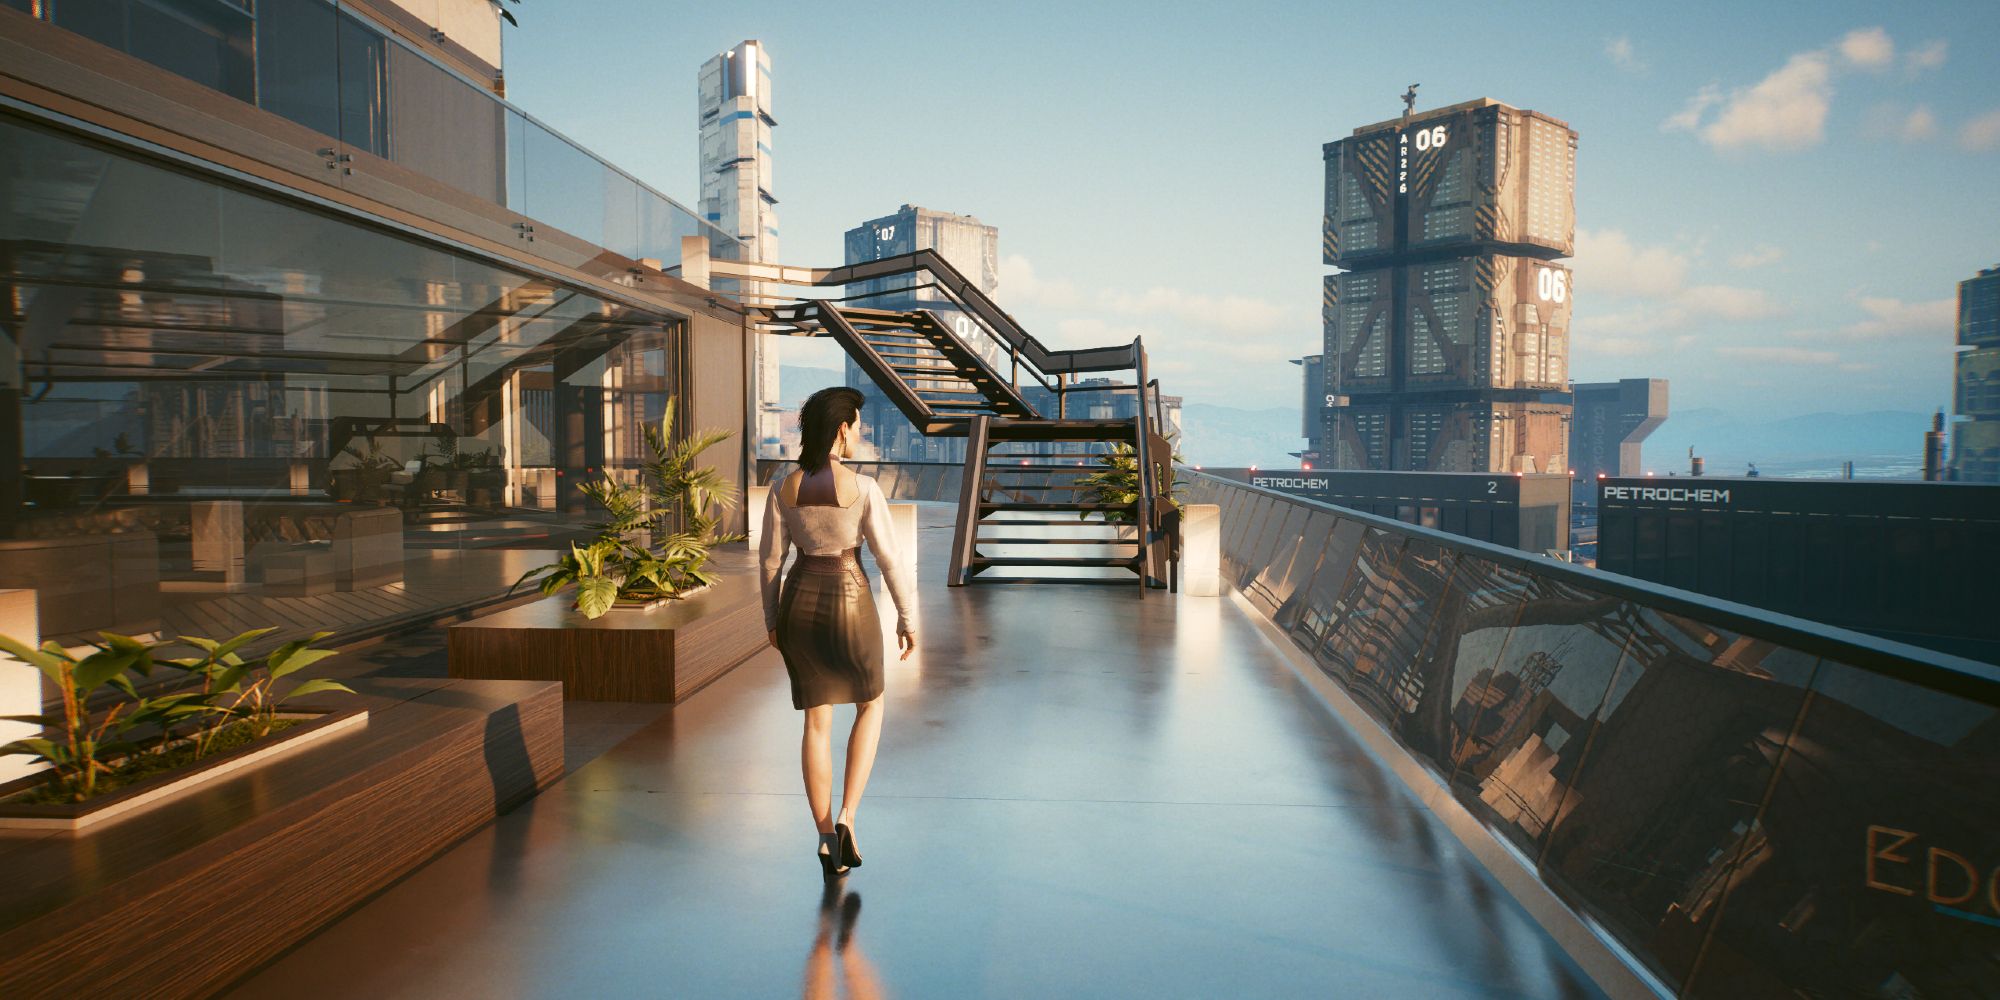 Elizabeth Peralez taking you on a tour across her penthouse in Cyberpunk 2077.